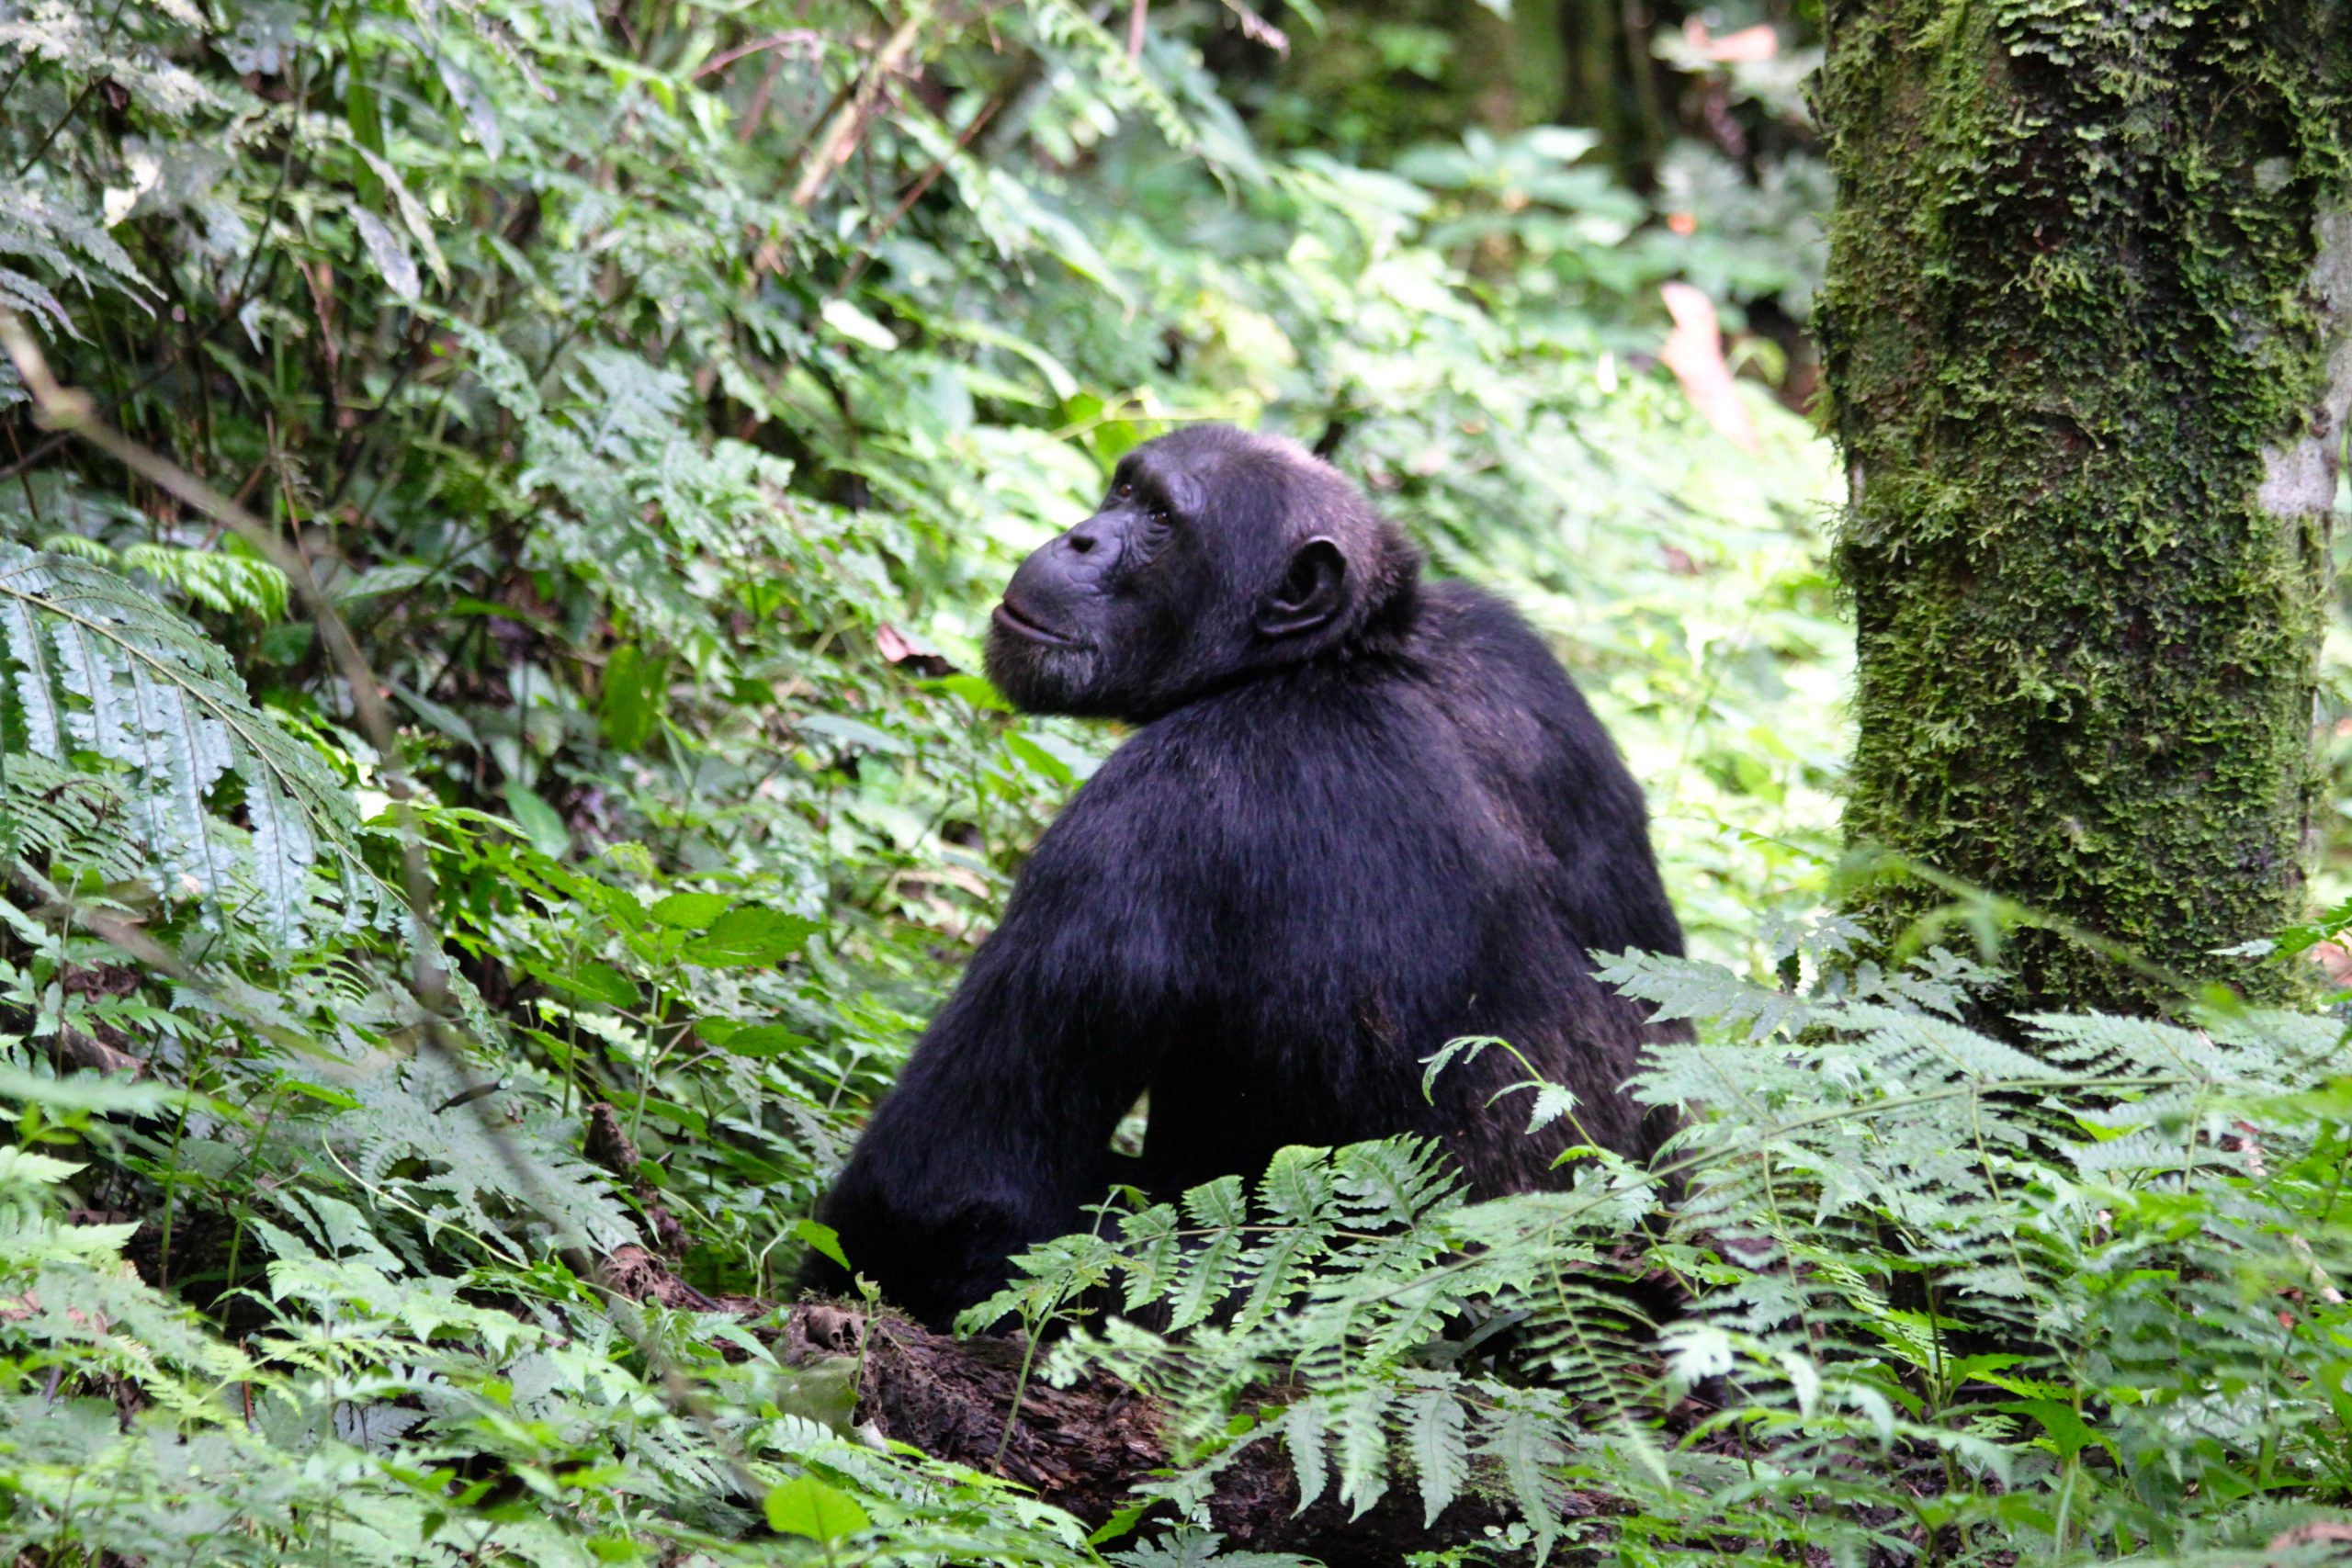 Chimpanzee cultures